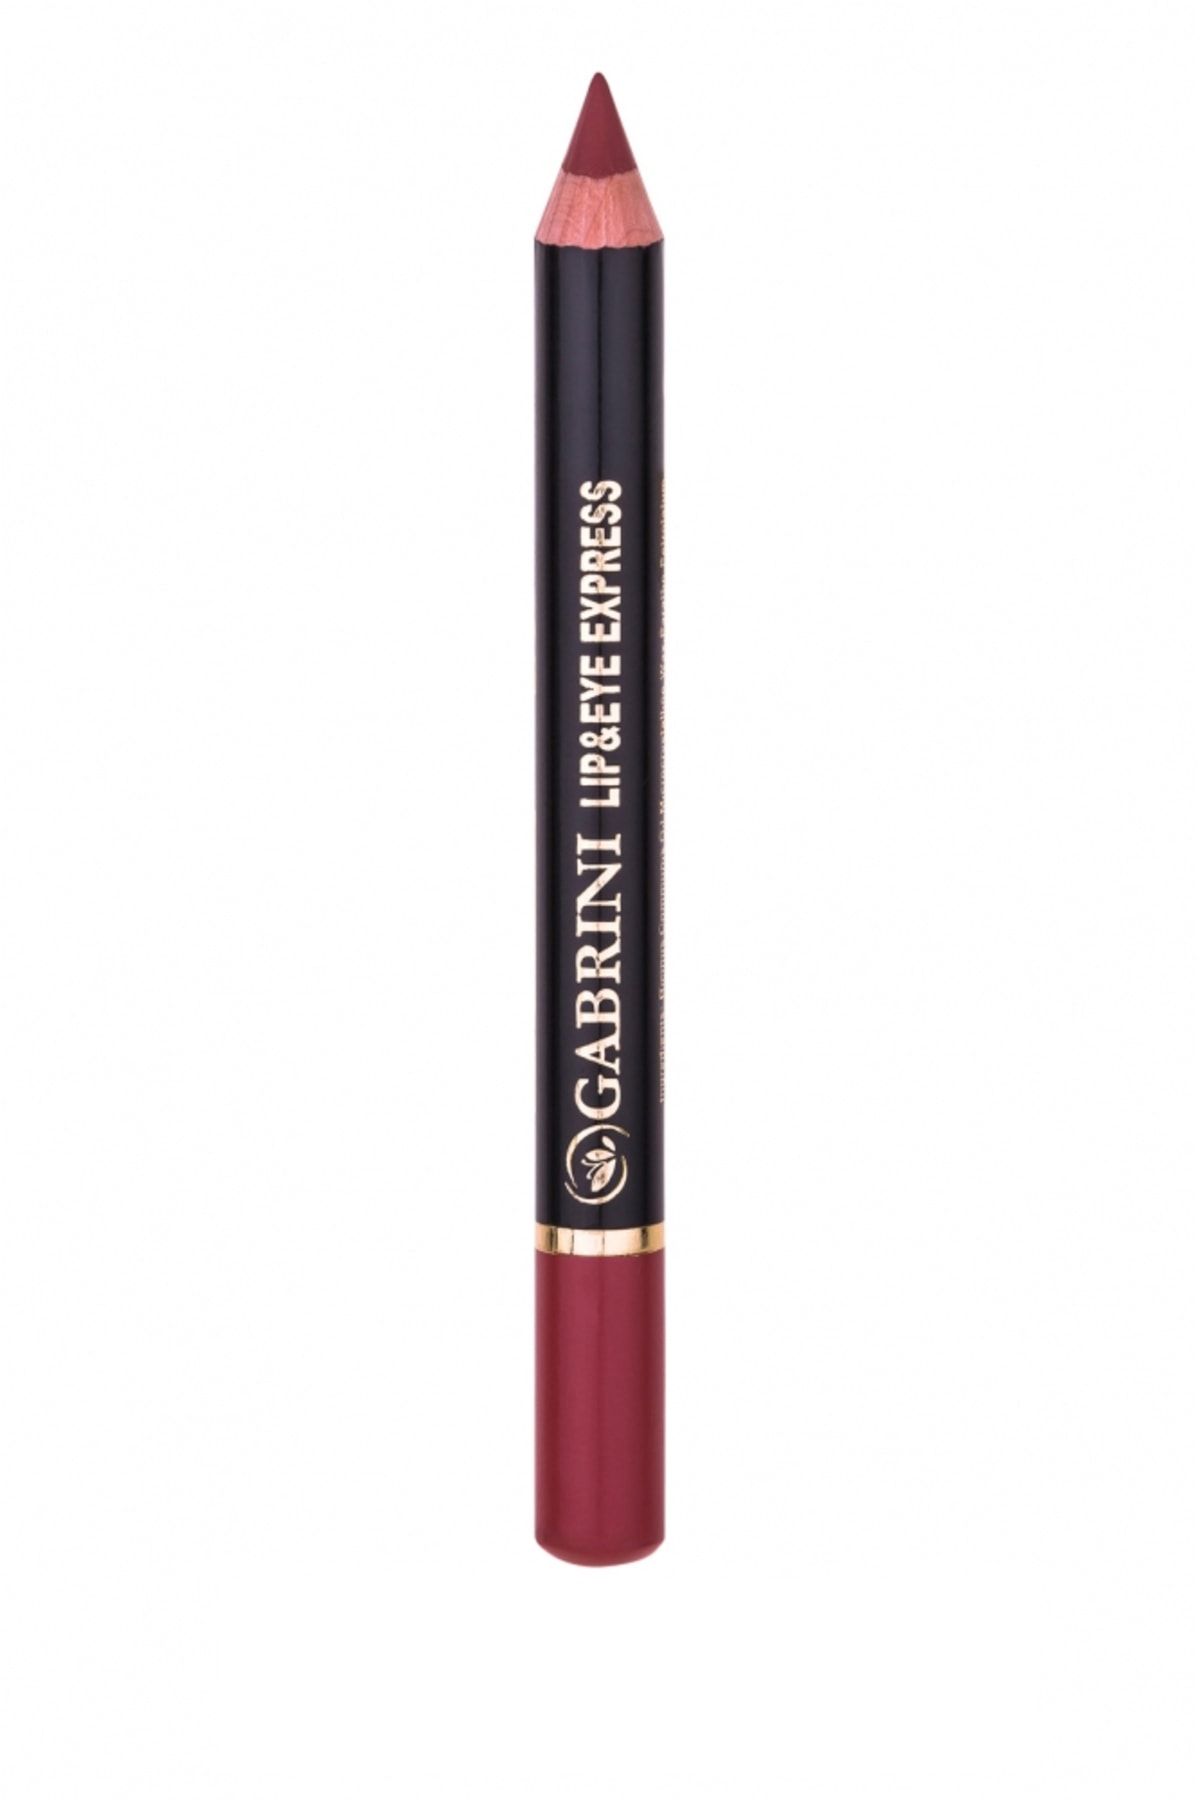 Gabrini Express Lip& Eye Pencil - 116